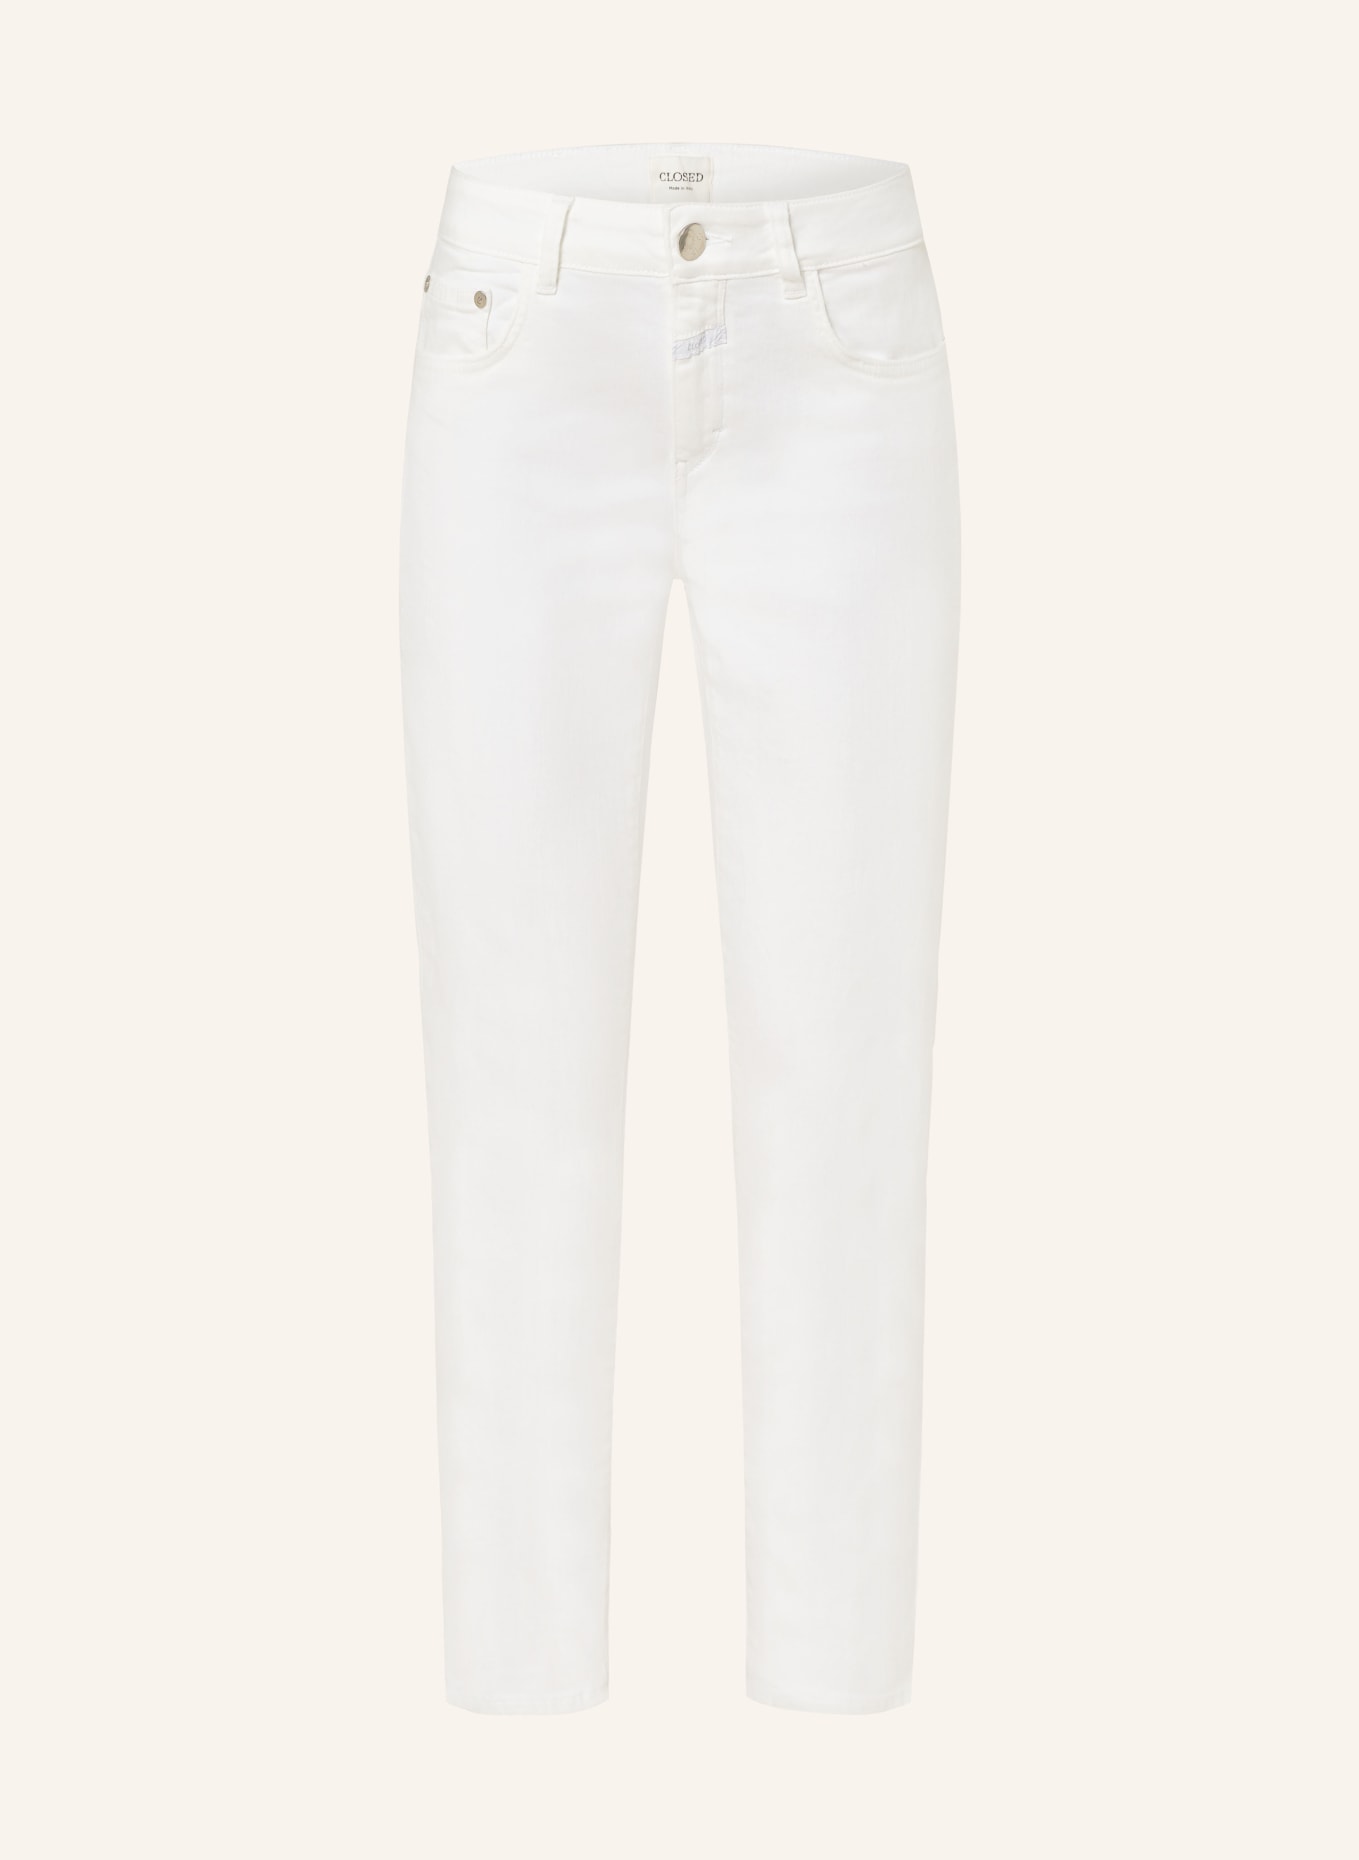 CLOSED Jeans BAKER, Farbe: 200 WHITE (Bild 1)